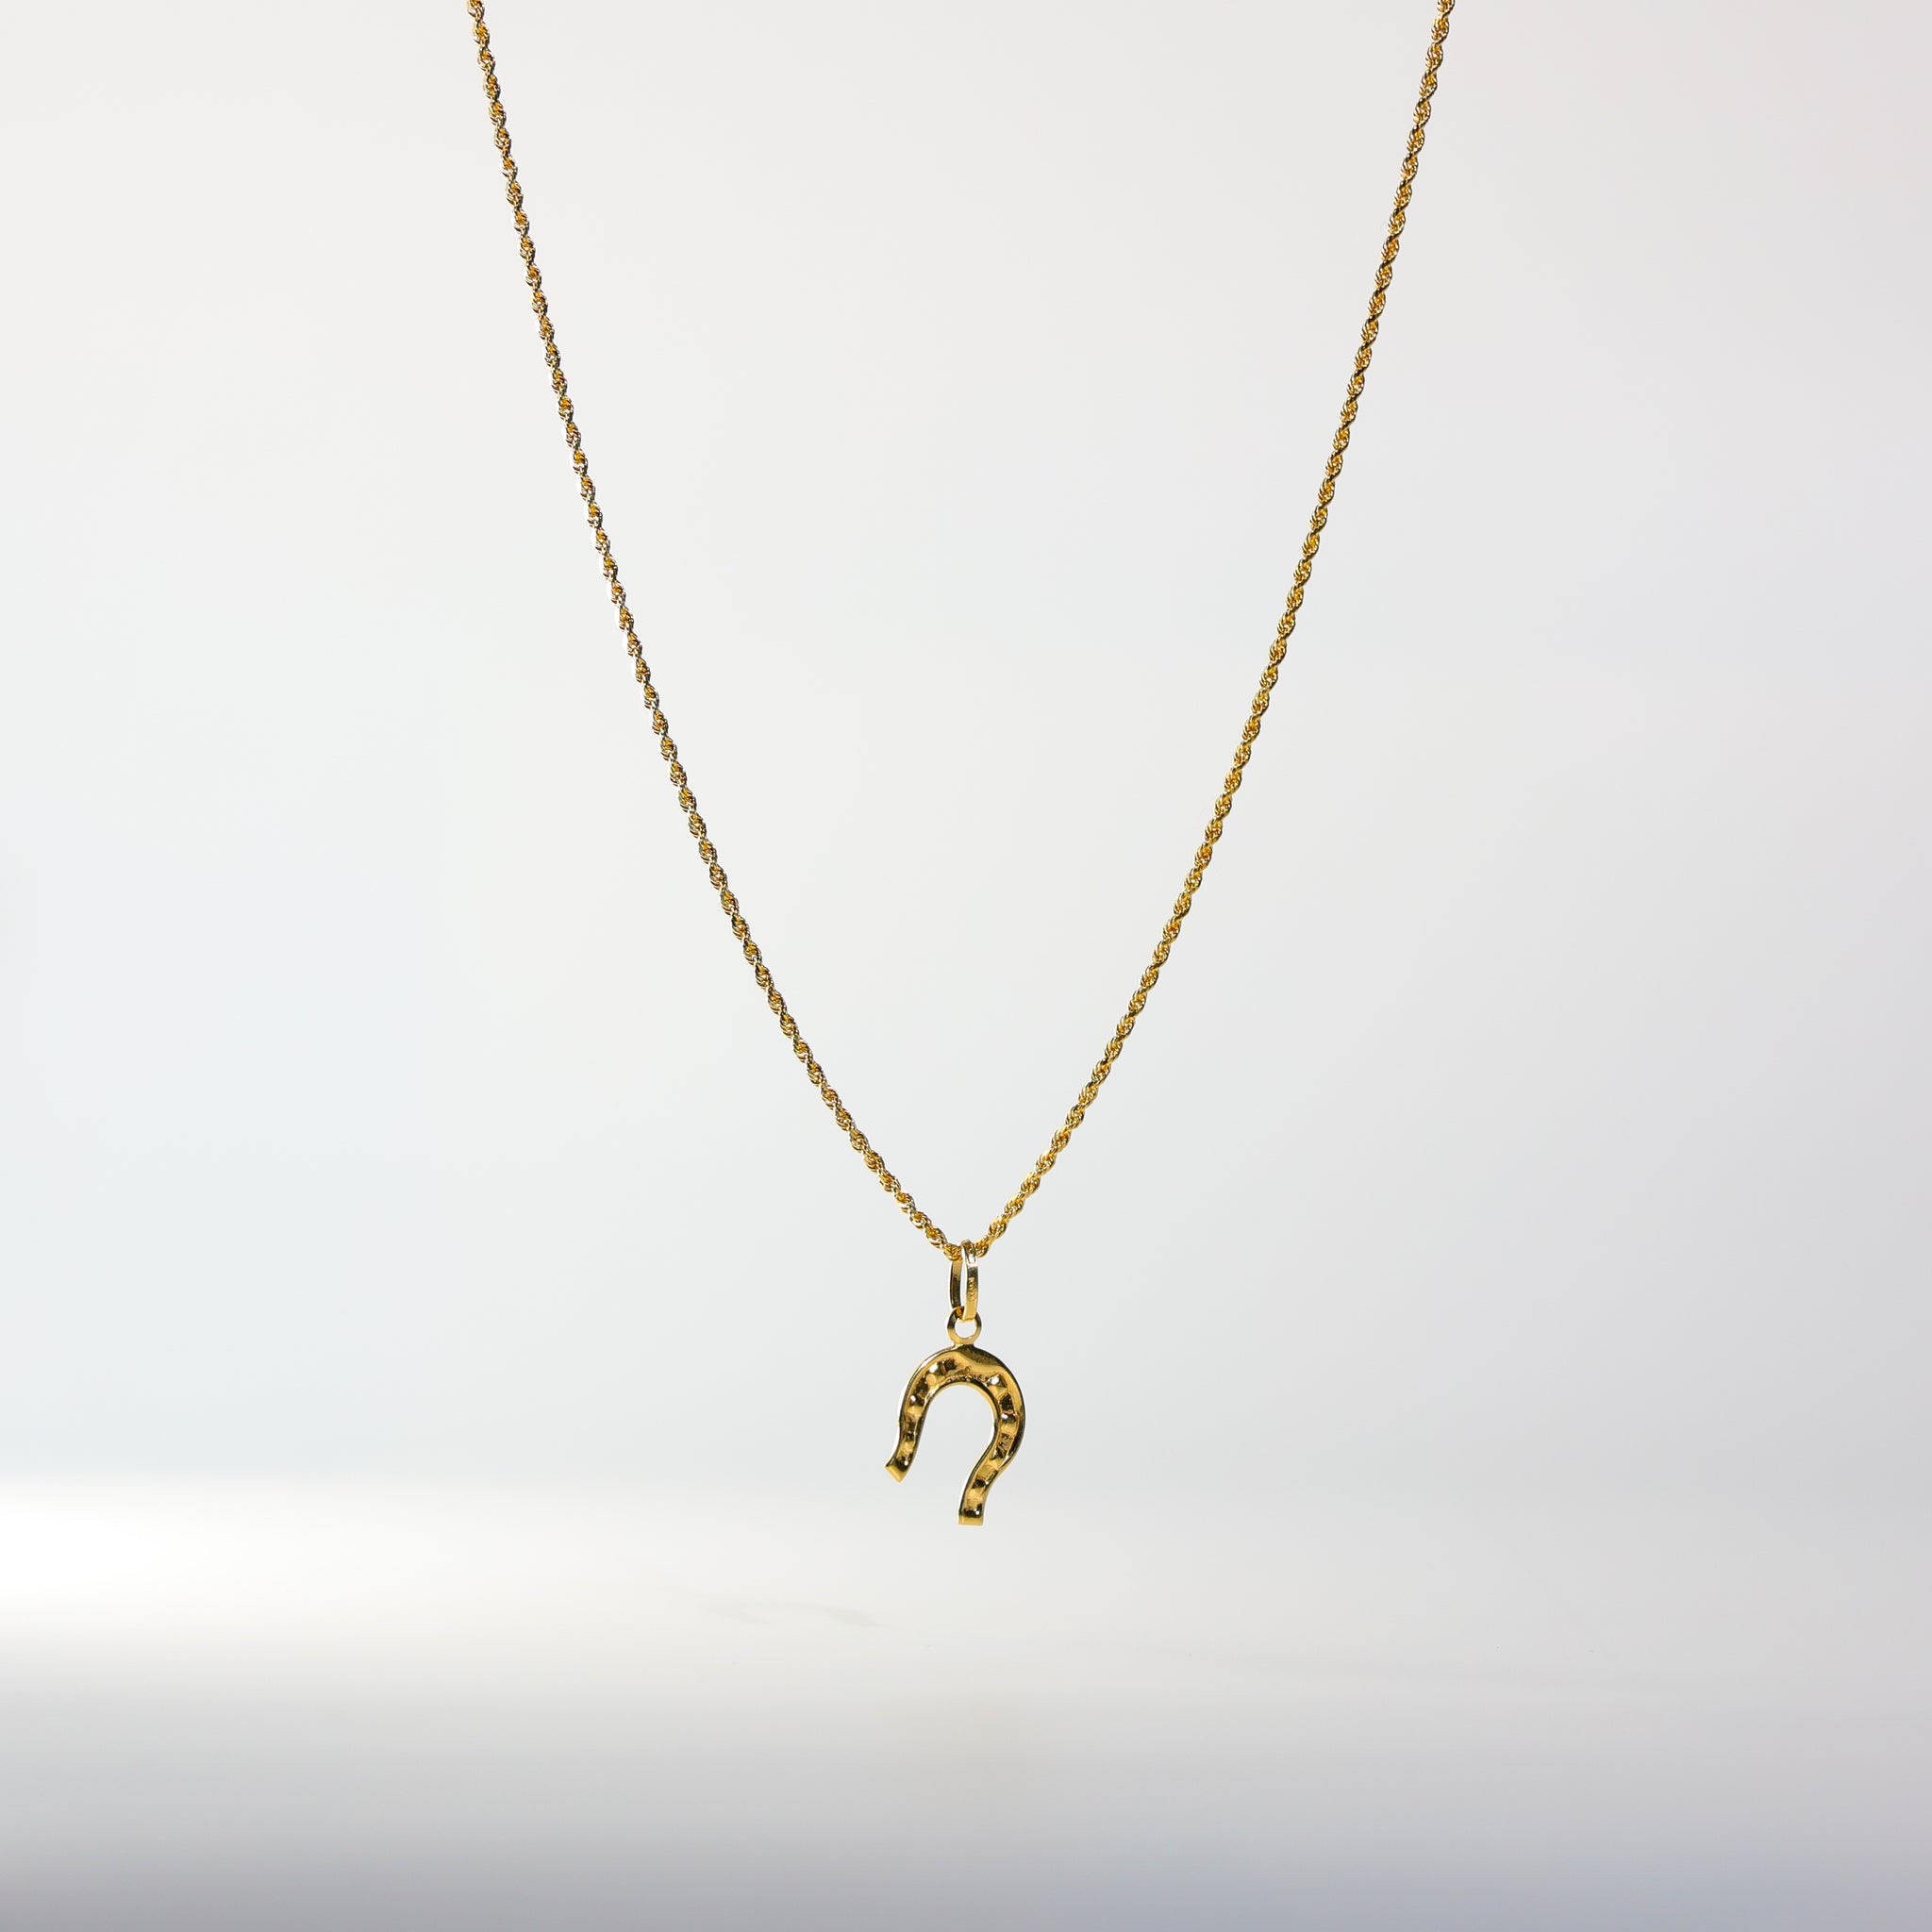 Gold Lucky Horseshoe Pendant Model-1707 - Charlie & Co. Jewelry